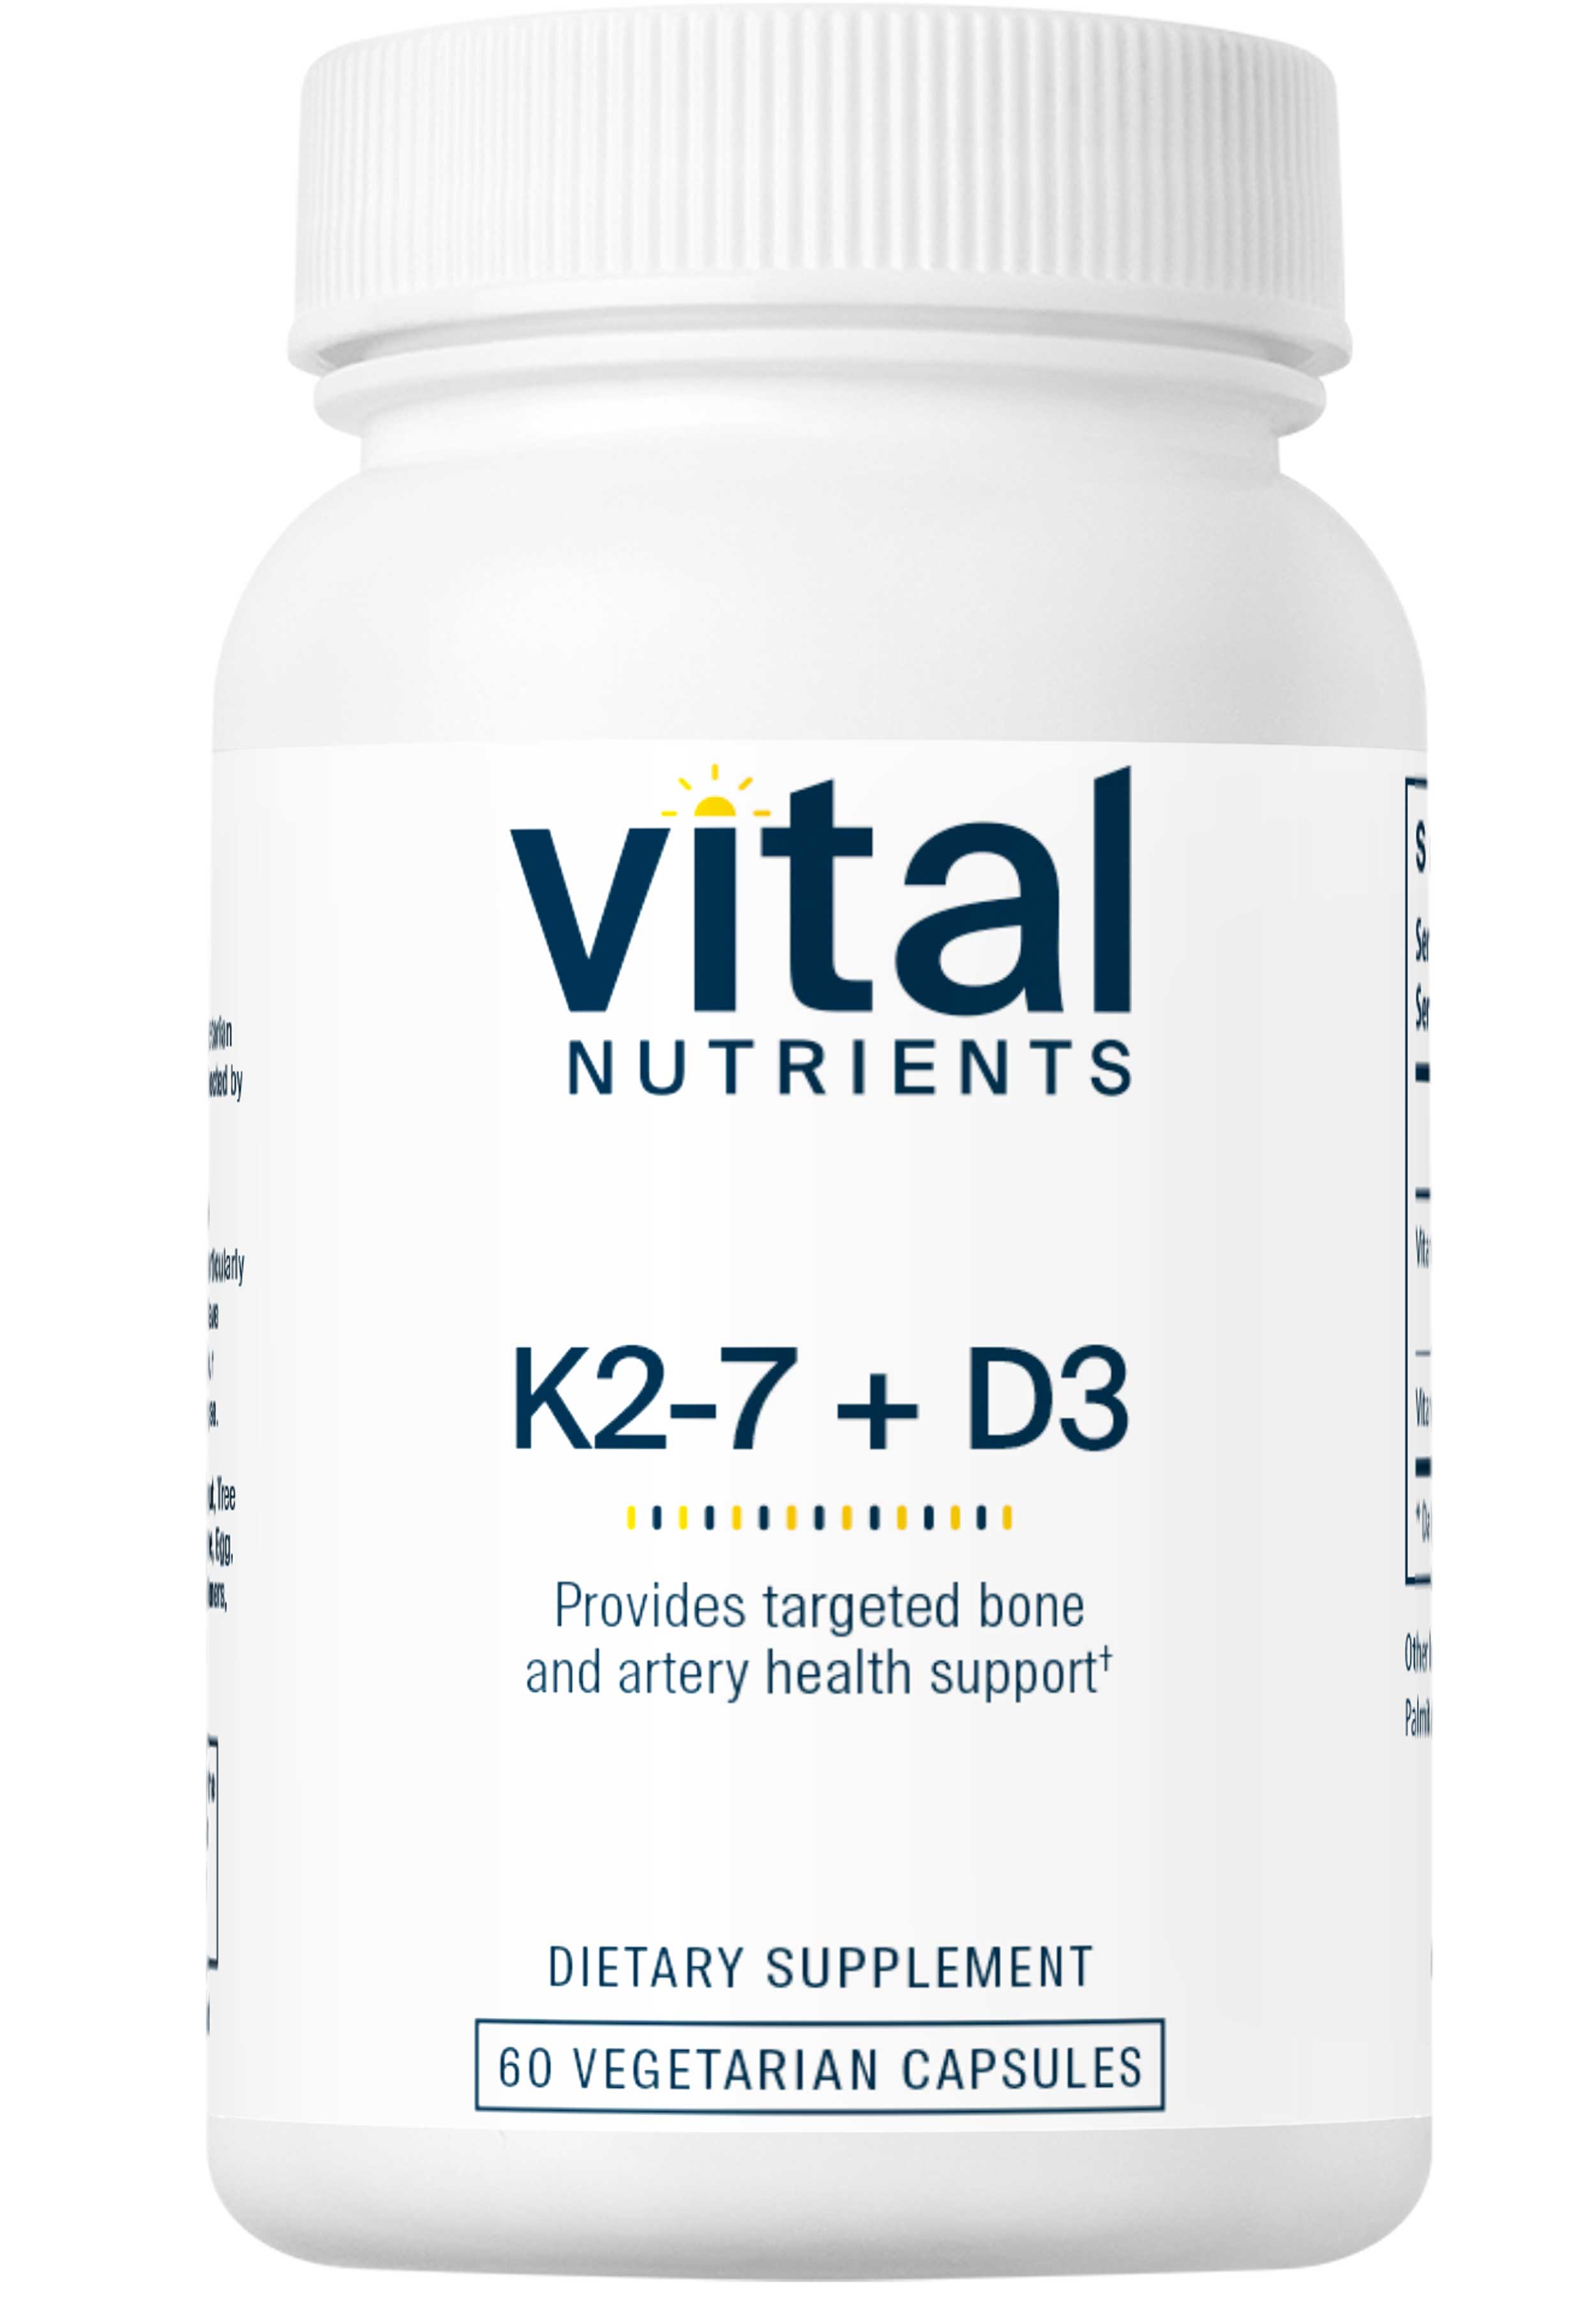 Vital Nutrients K2-7 + D3